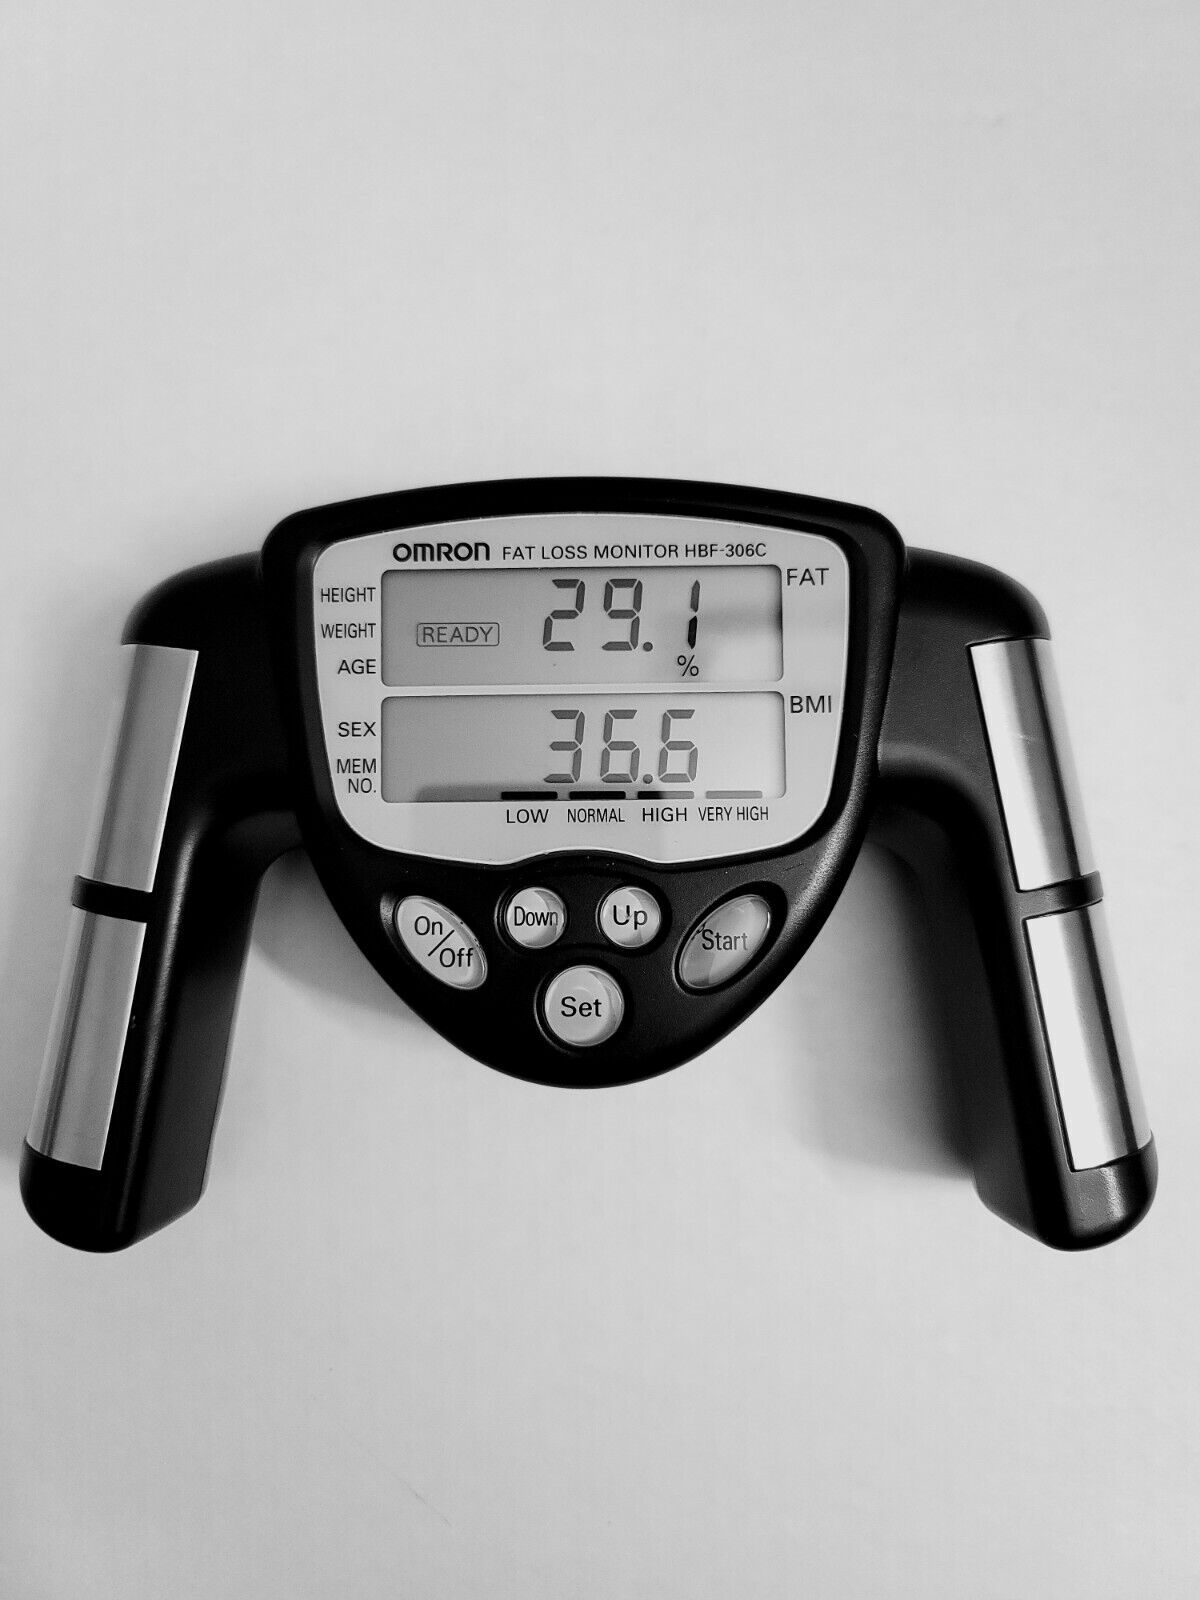 OMRON Handheld Max 47% OFF Body Chicago Mall Fat BMI HBF-306C Loss Monitor